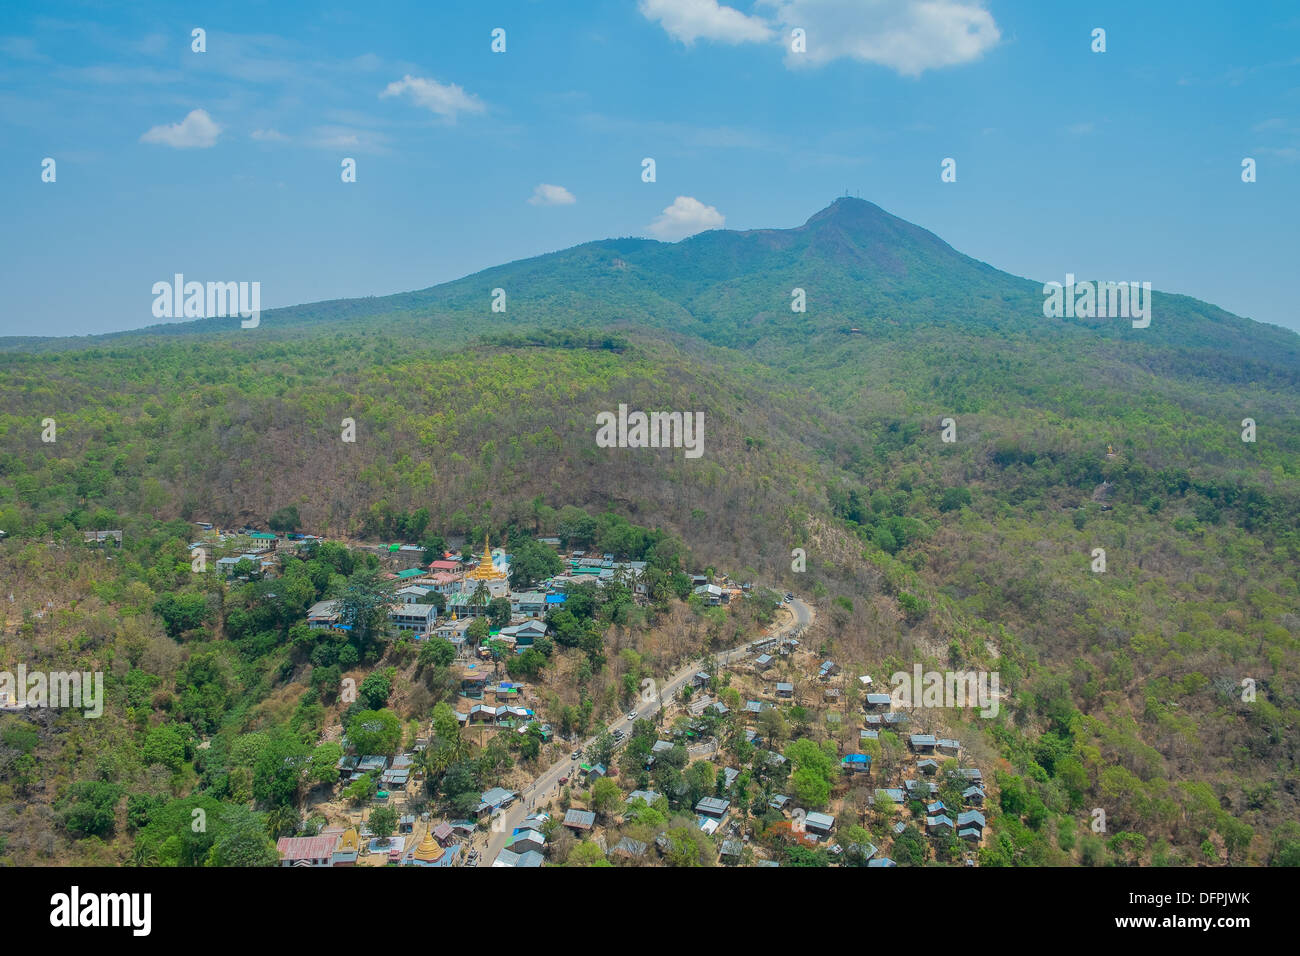 Mount Popa and mountain village, Myanmar, Southeast Asia Stock Photo